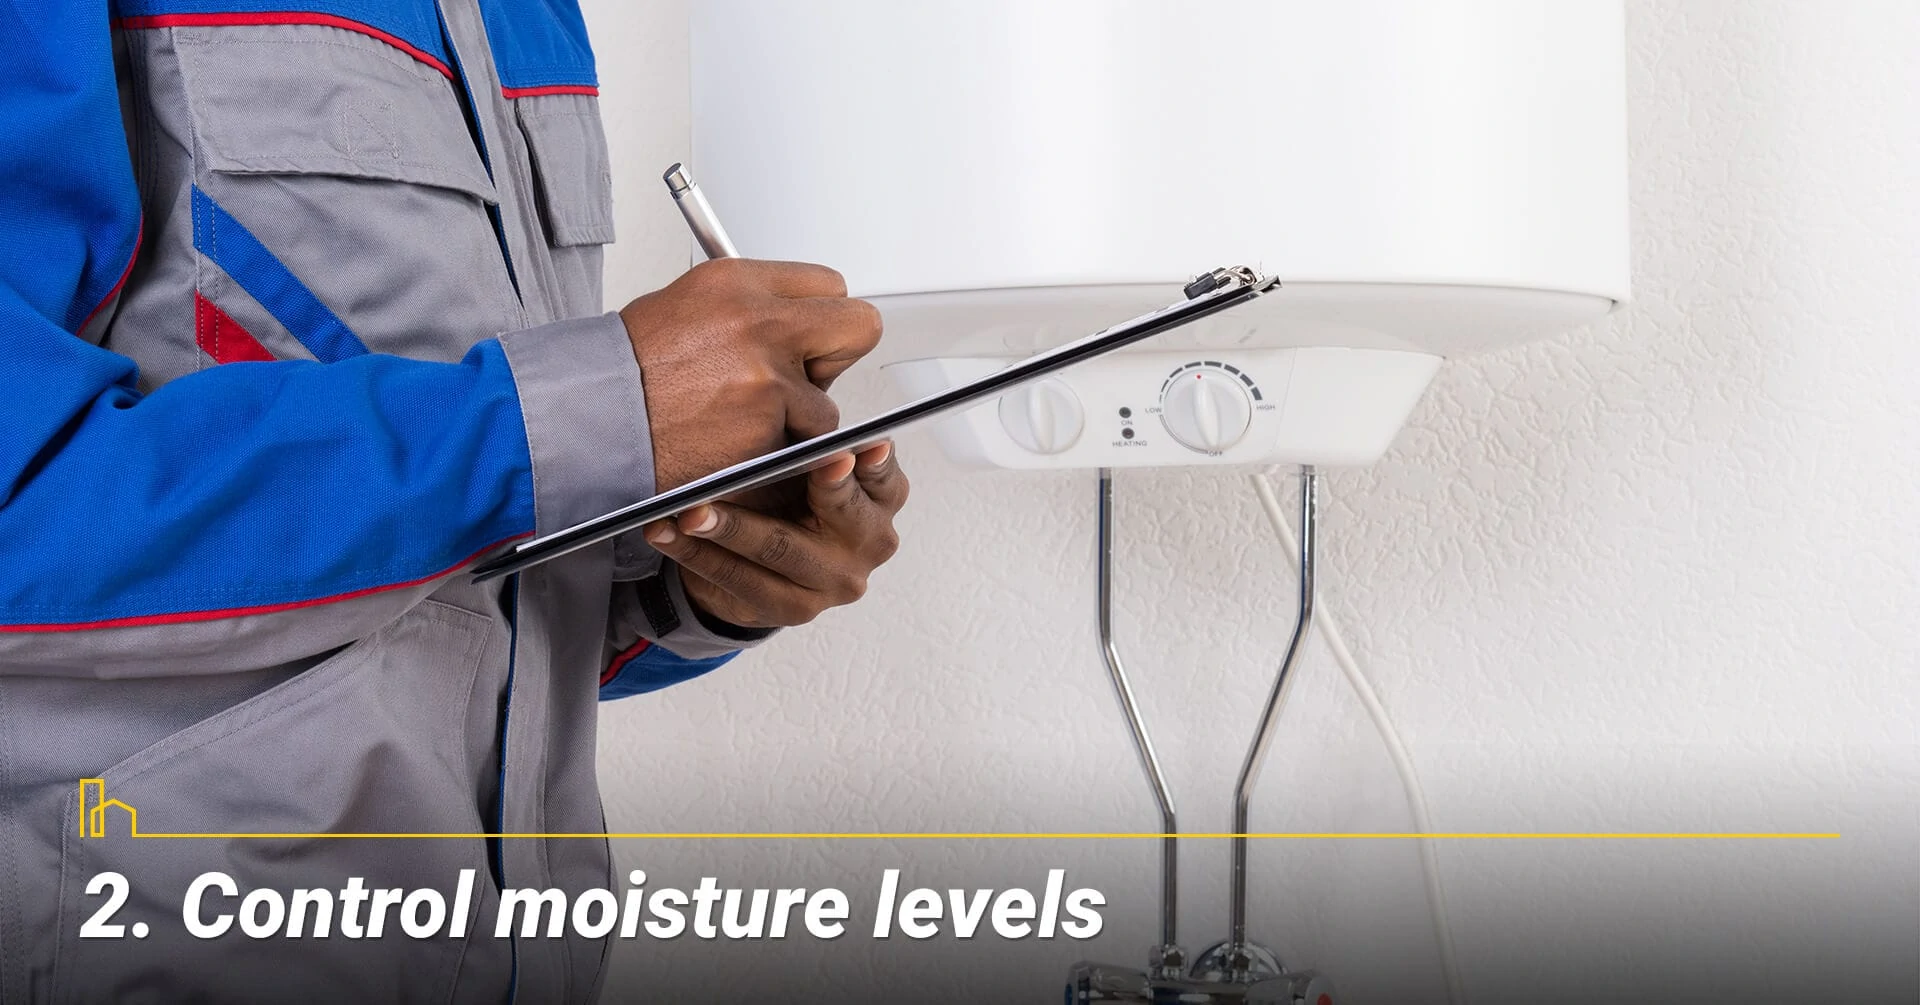 Control moisture levels, maintain a balanced level of moisture